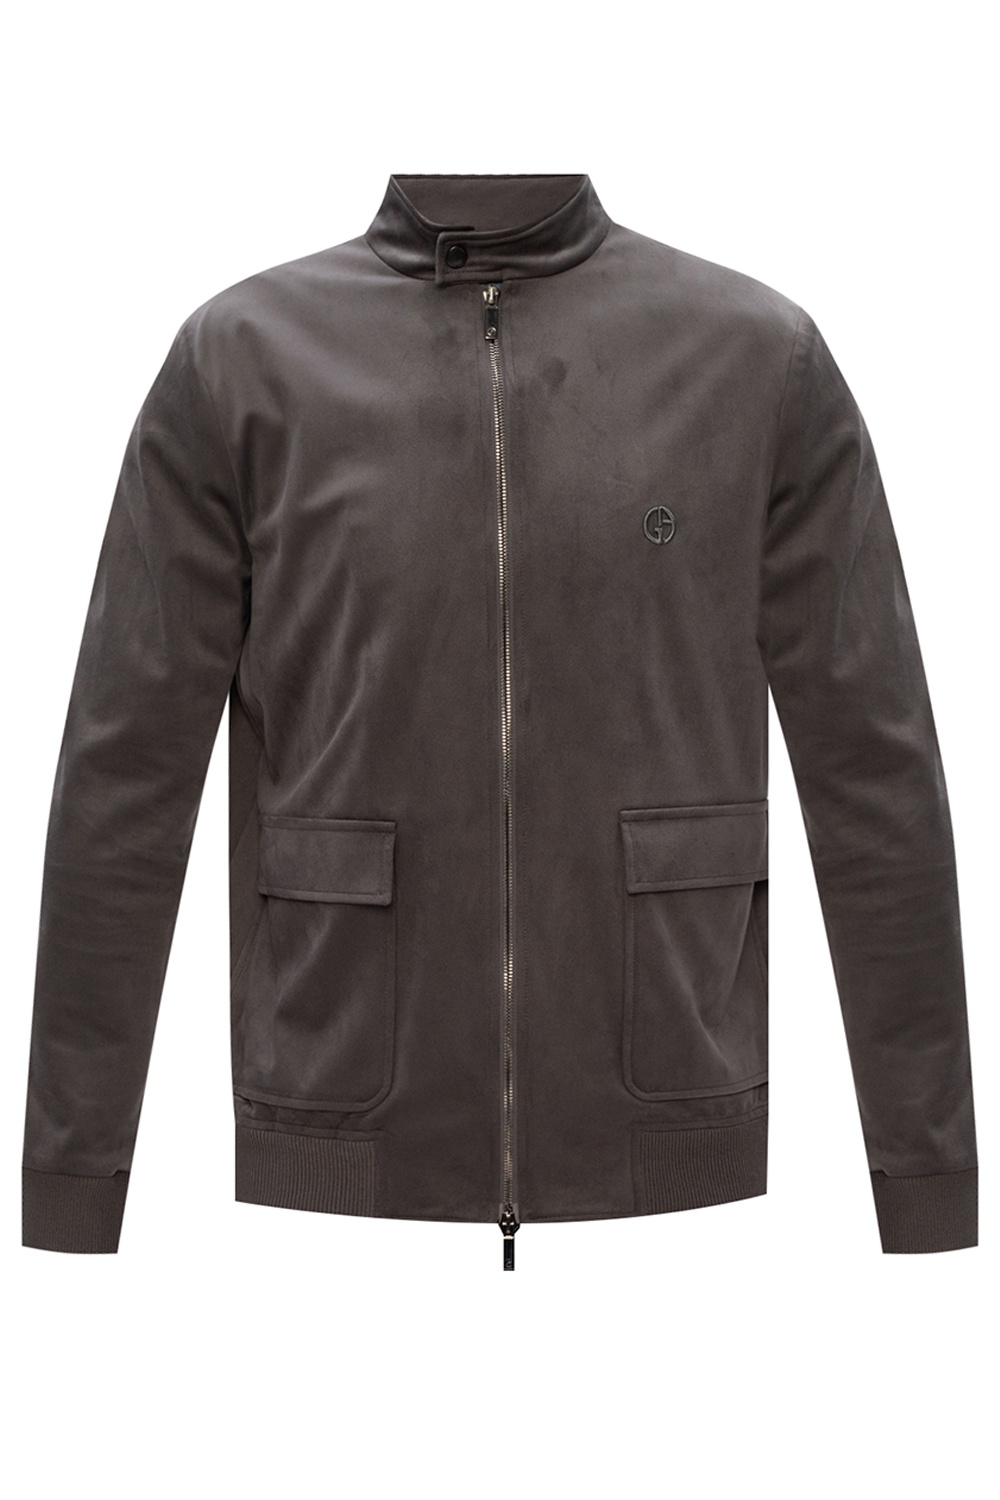 Giorgio Armani Logo-patched jacket